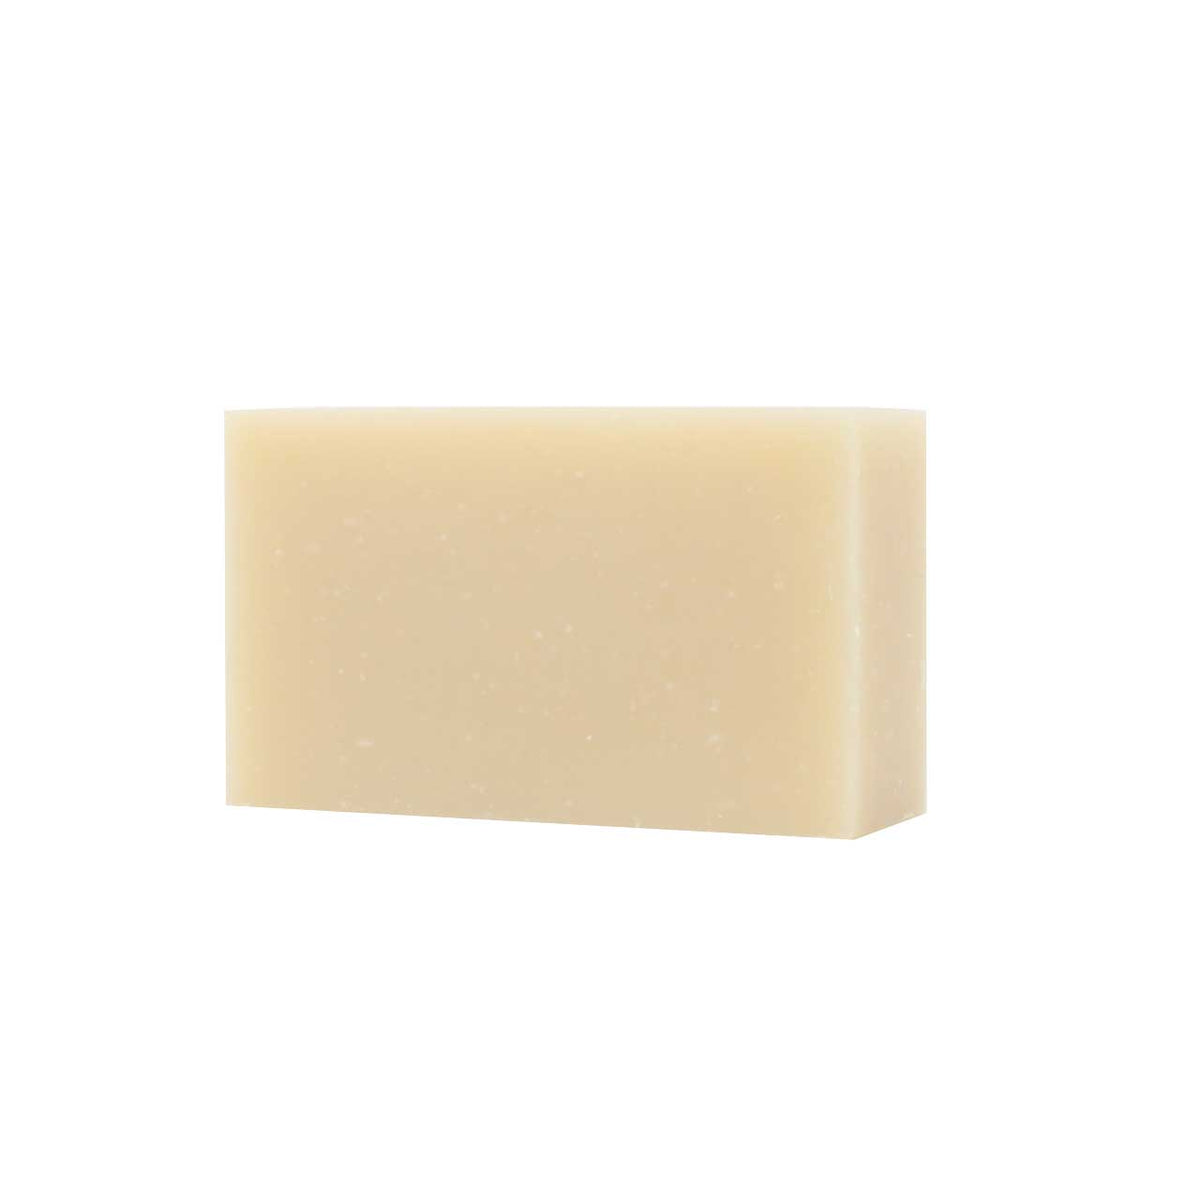 Mint Condition Shampoo Bar - 1 Pack